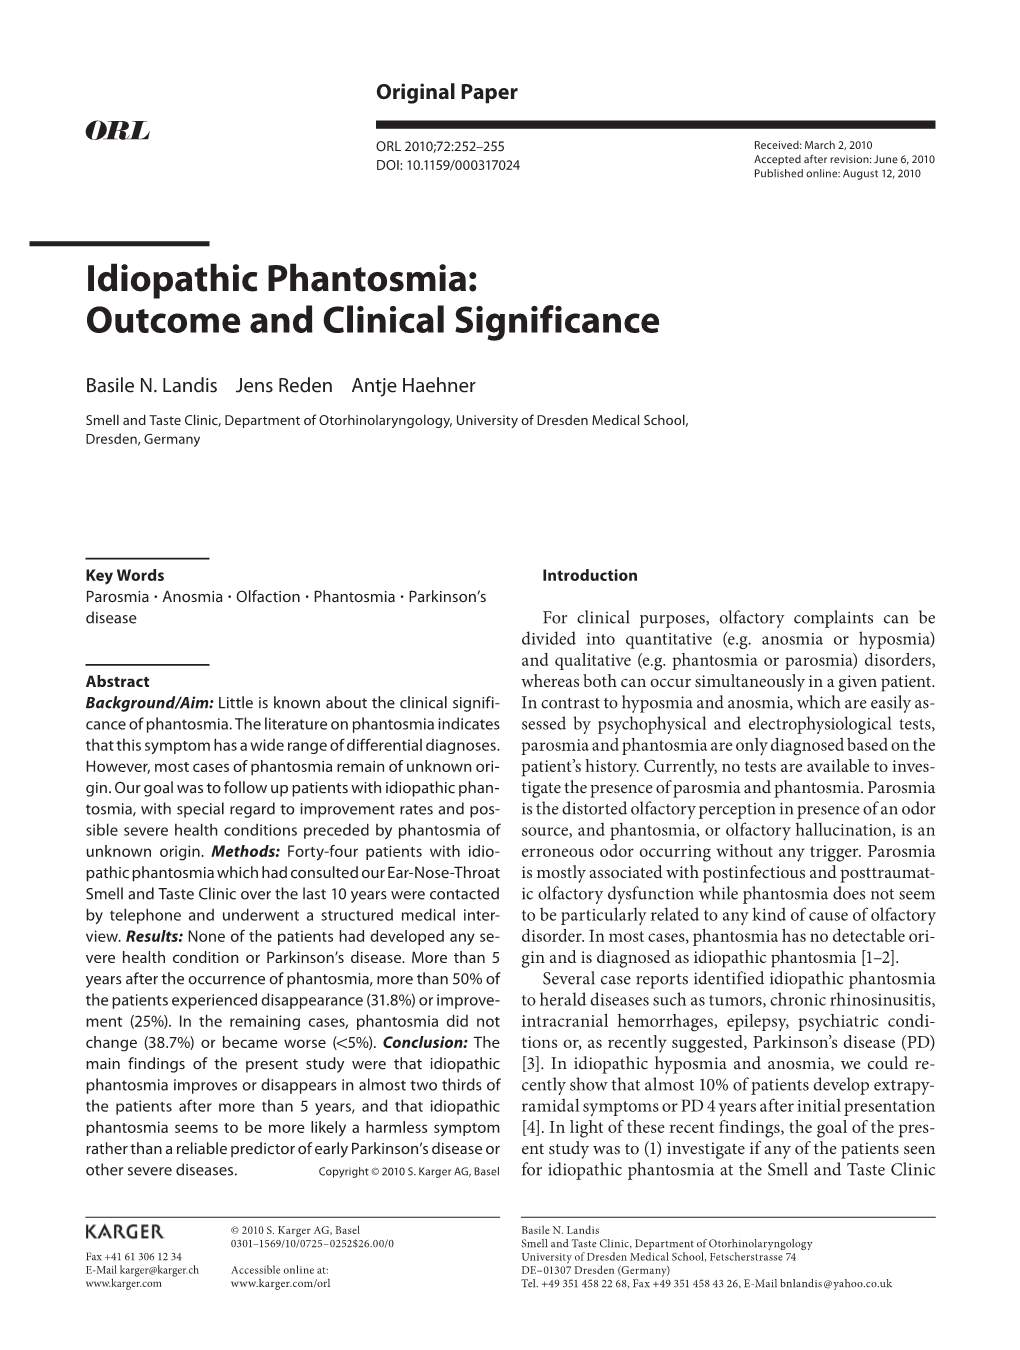 Idiopathic Phantosmia: Outcome and Clinical Significance